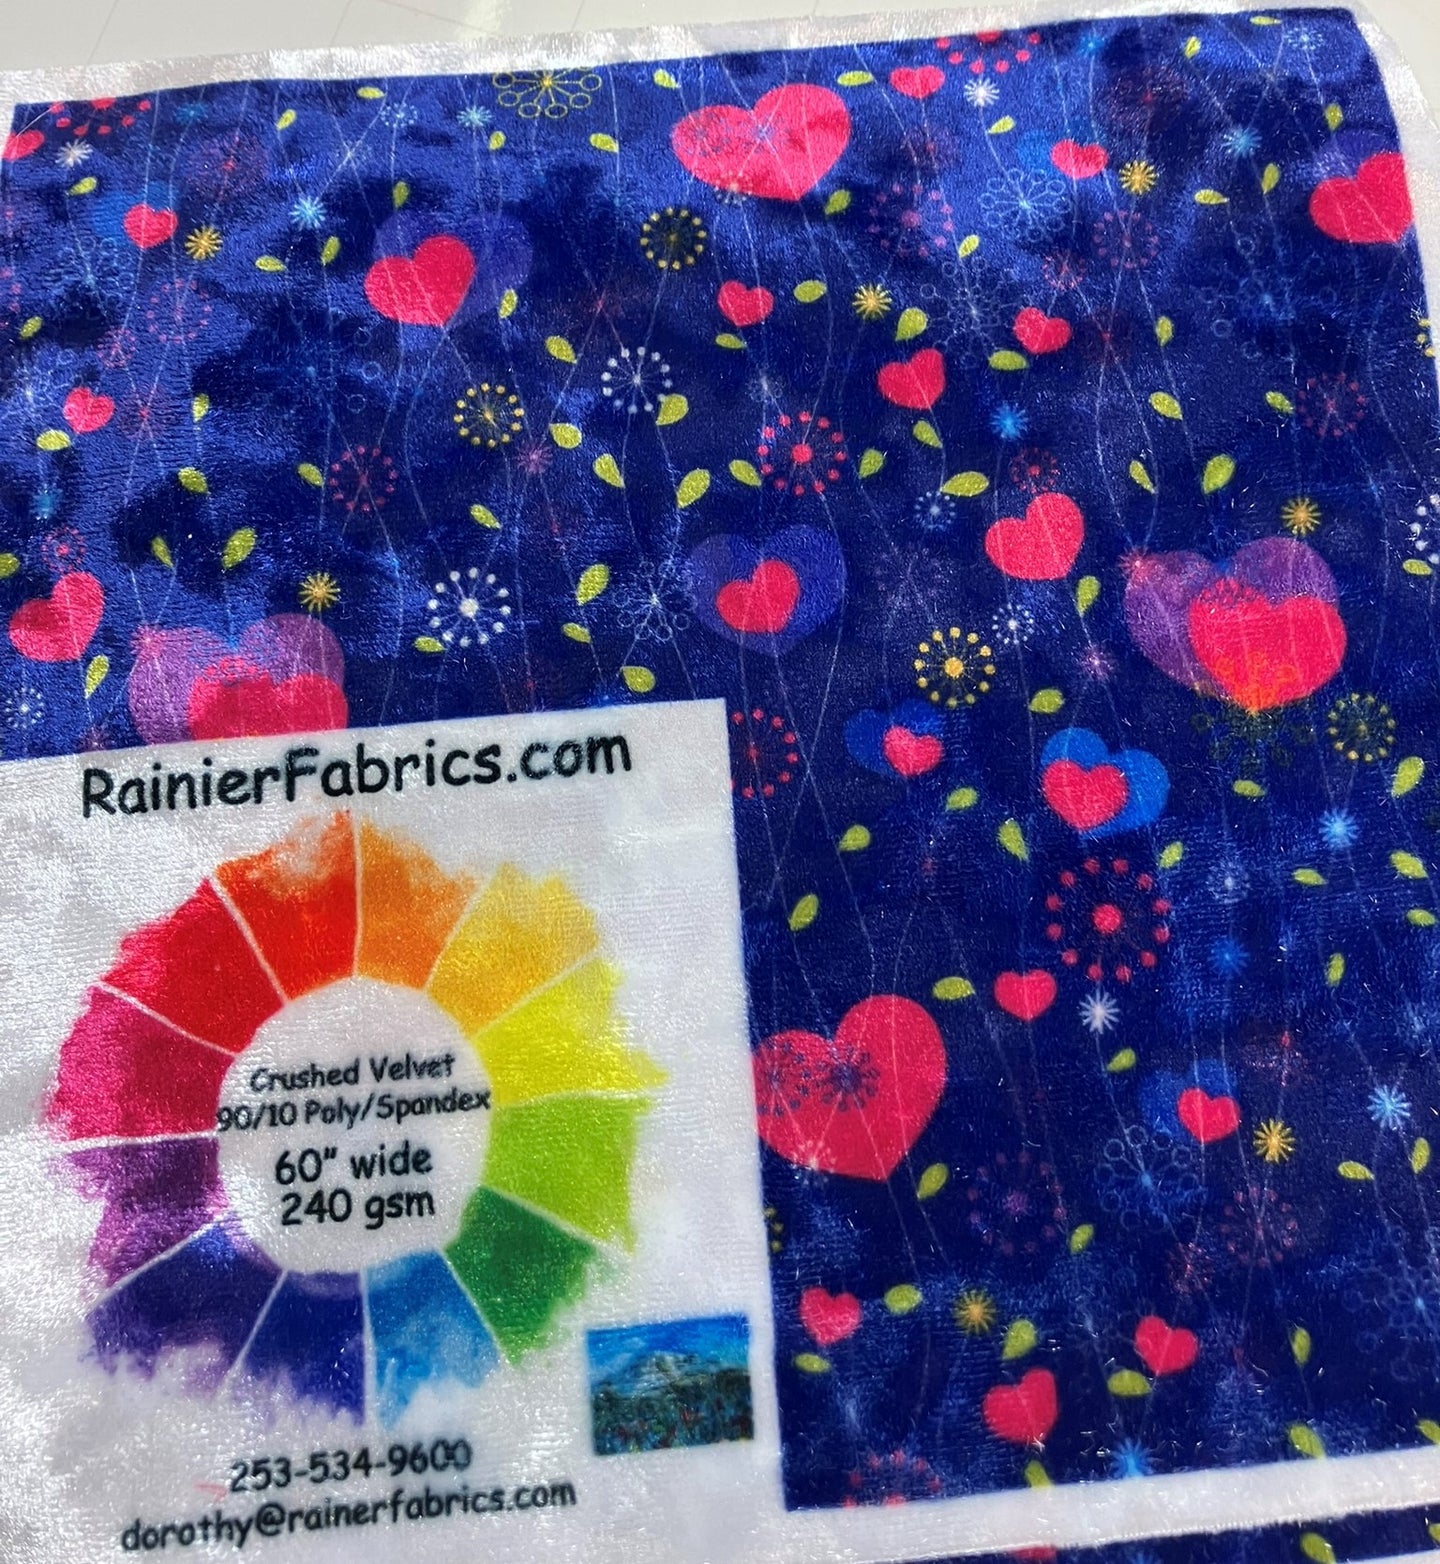 Rainier Fabrics Sample Packs